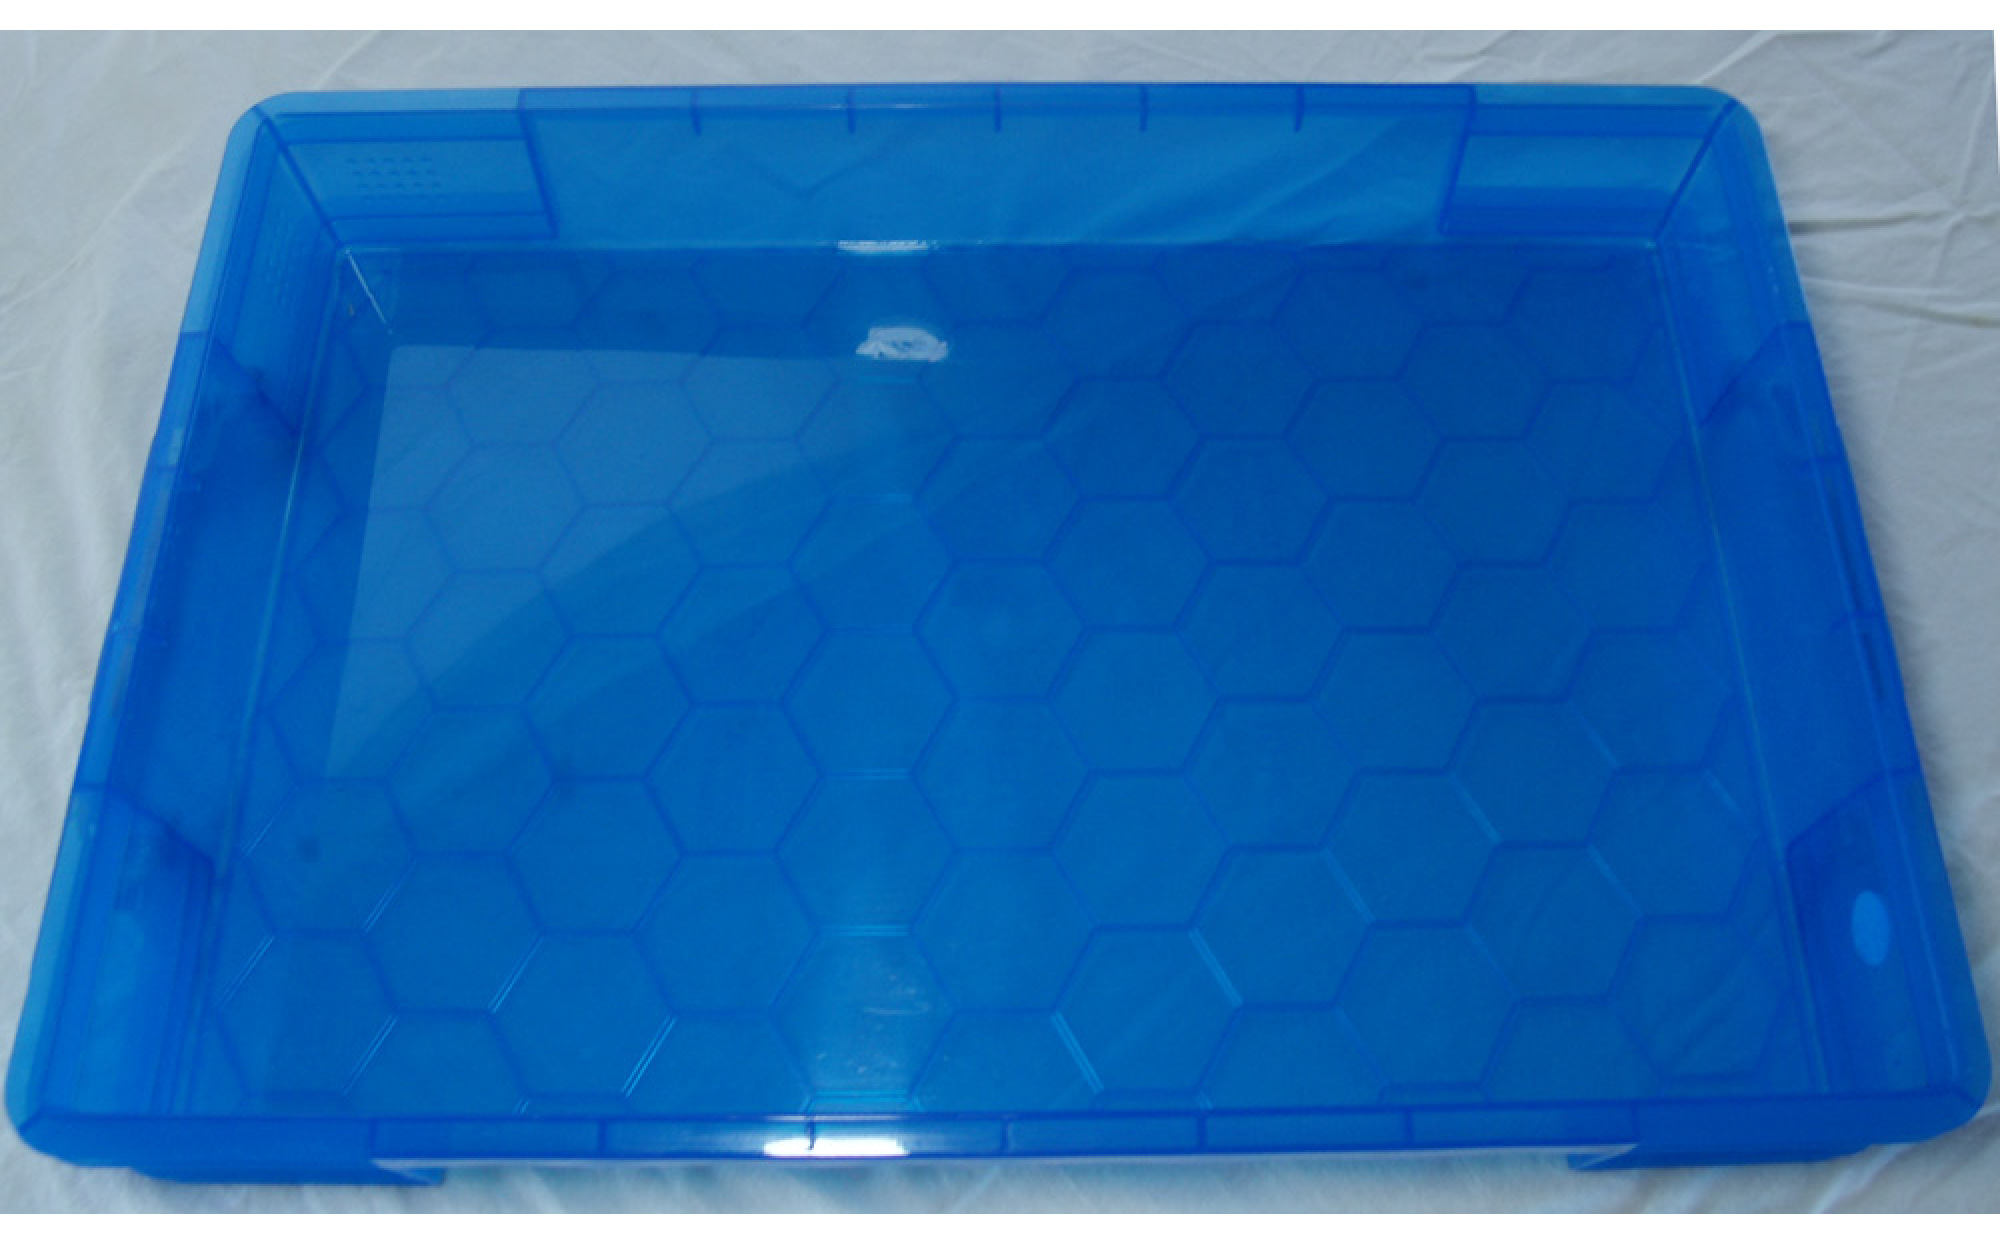 Baha Play Sand - 20lb - Aqua Blue – Sand Tray Therapy